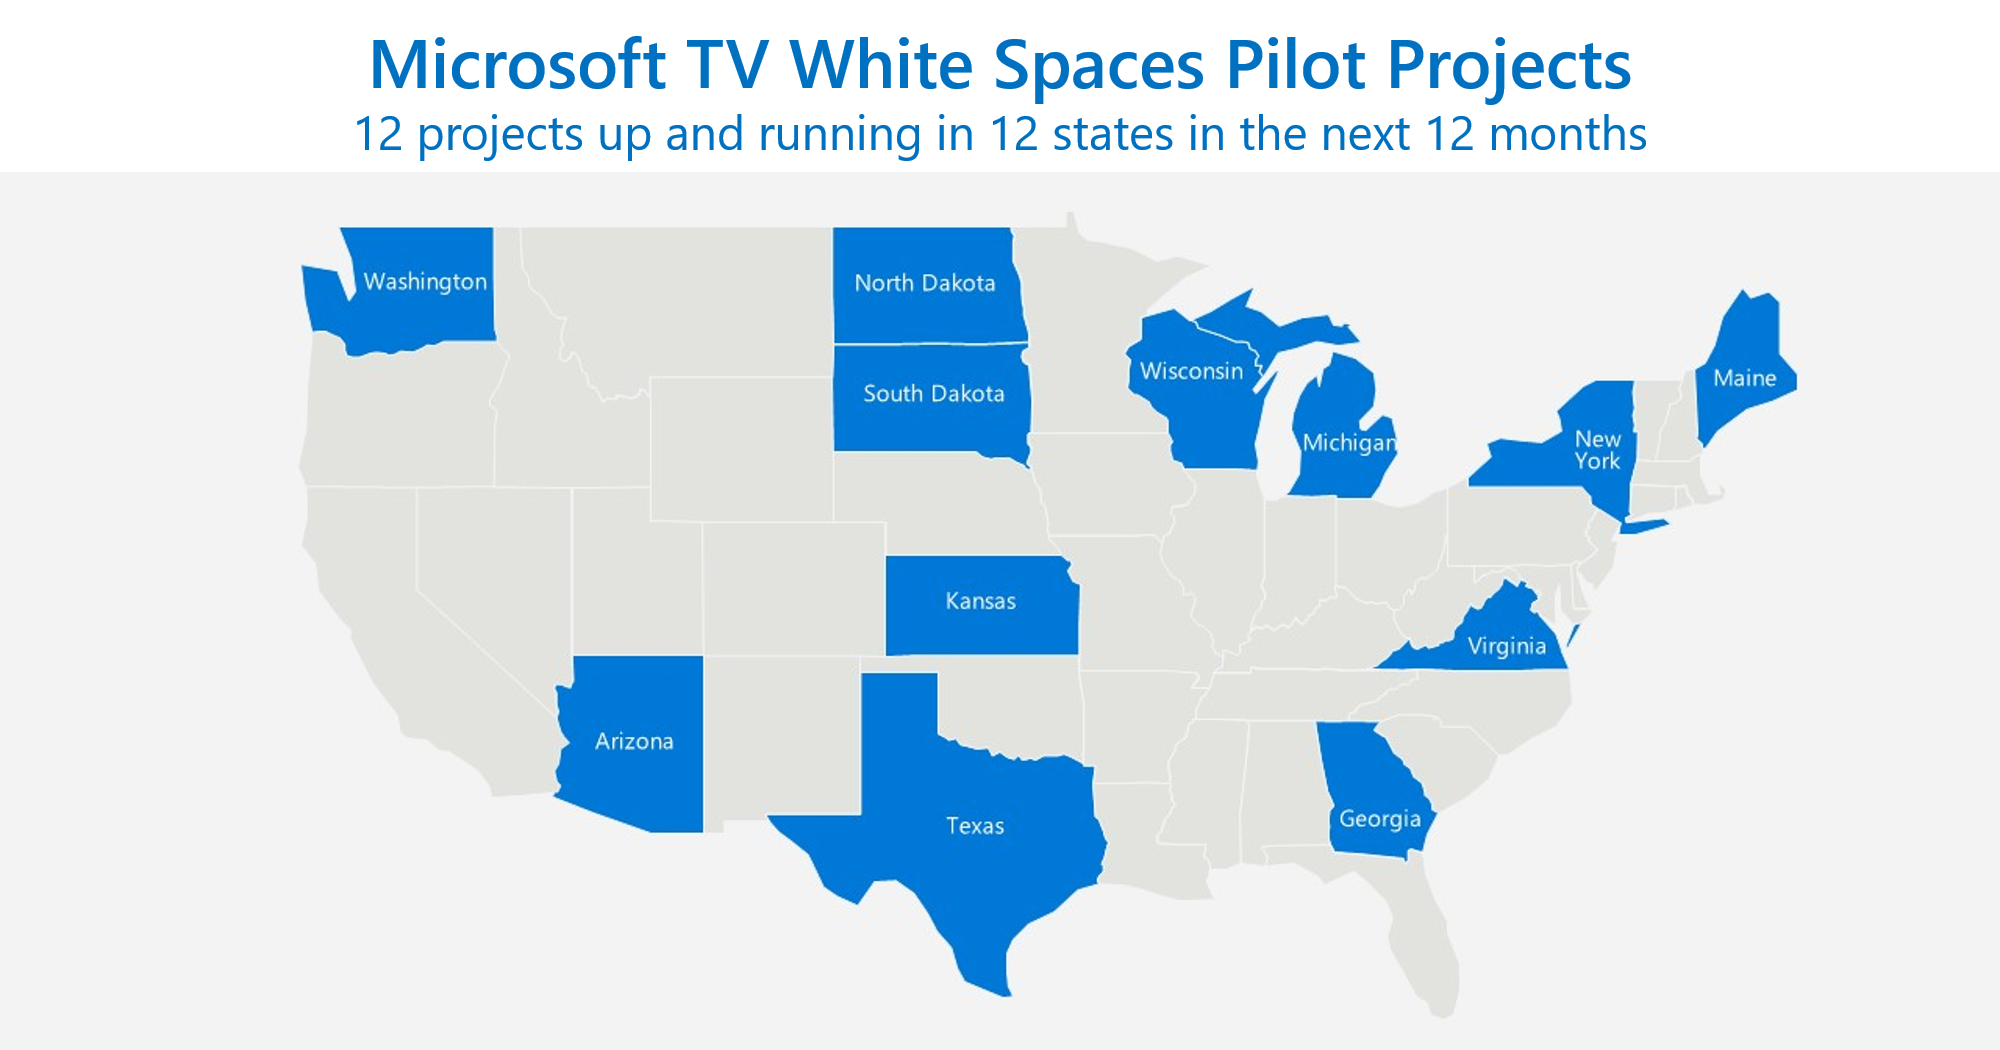 Map shows Microsoft TV White Space projects in Washington, North Dakota, South Dakota, Kansas, Texas, Arizona, Wisconsin, Michigan, Virginia, New York, Maine and Georgia